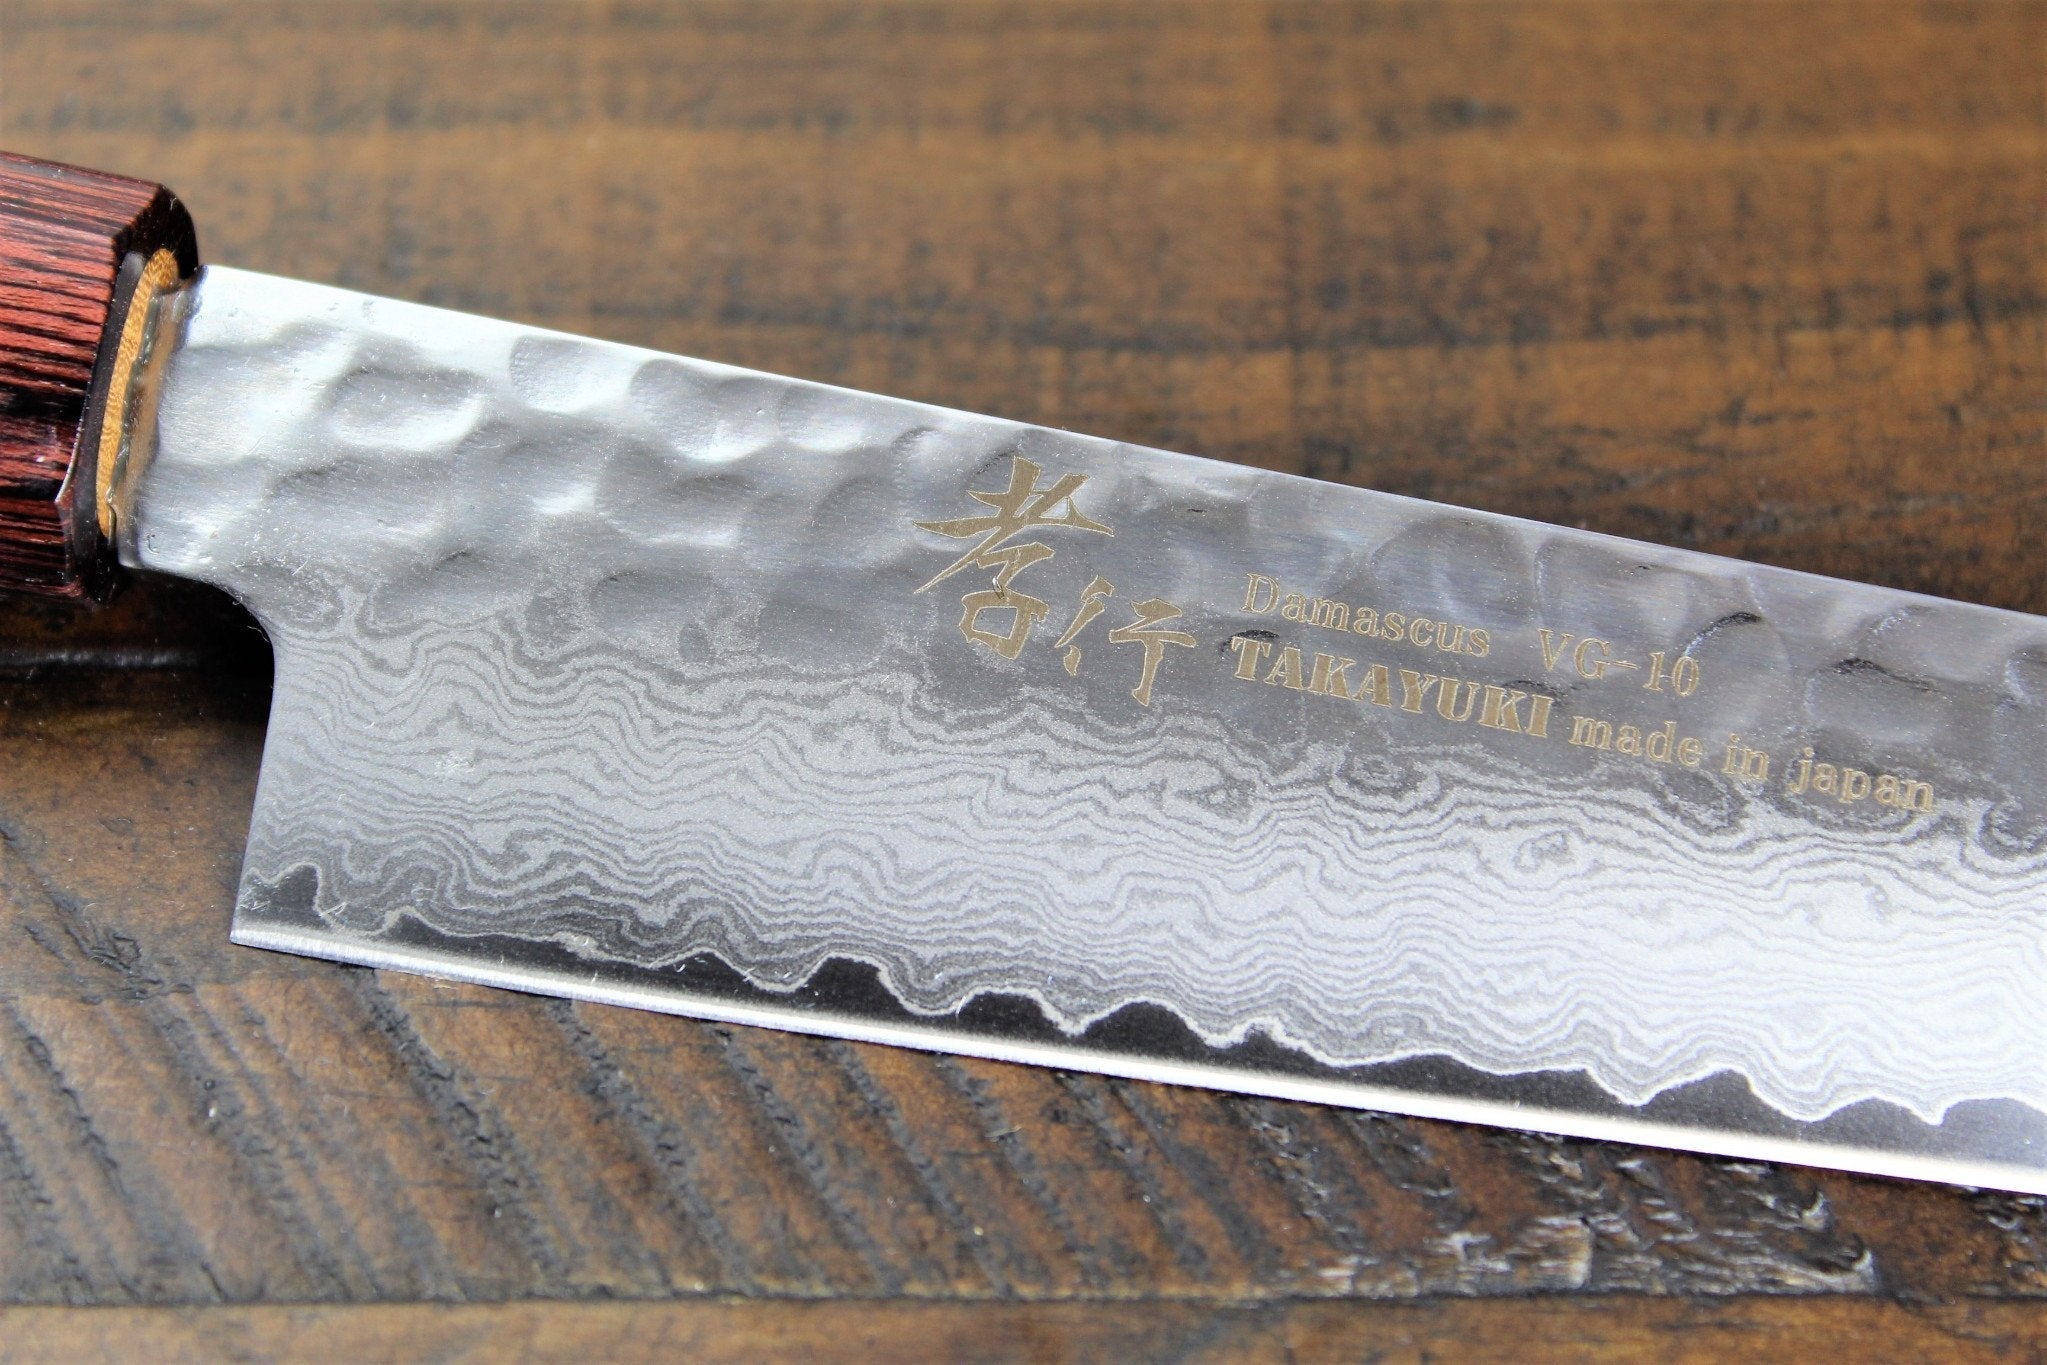 Sakai Takayuki SK4, the Best Carbon Steel Knives for Chefs